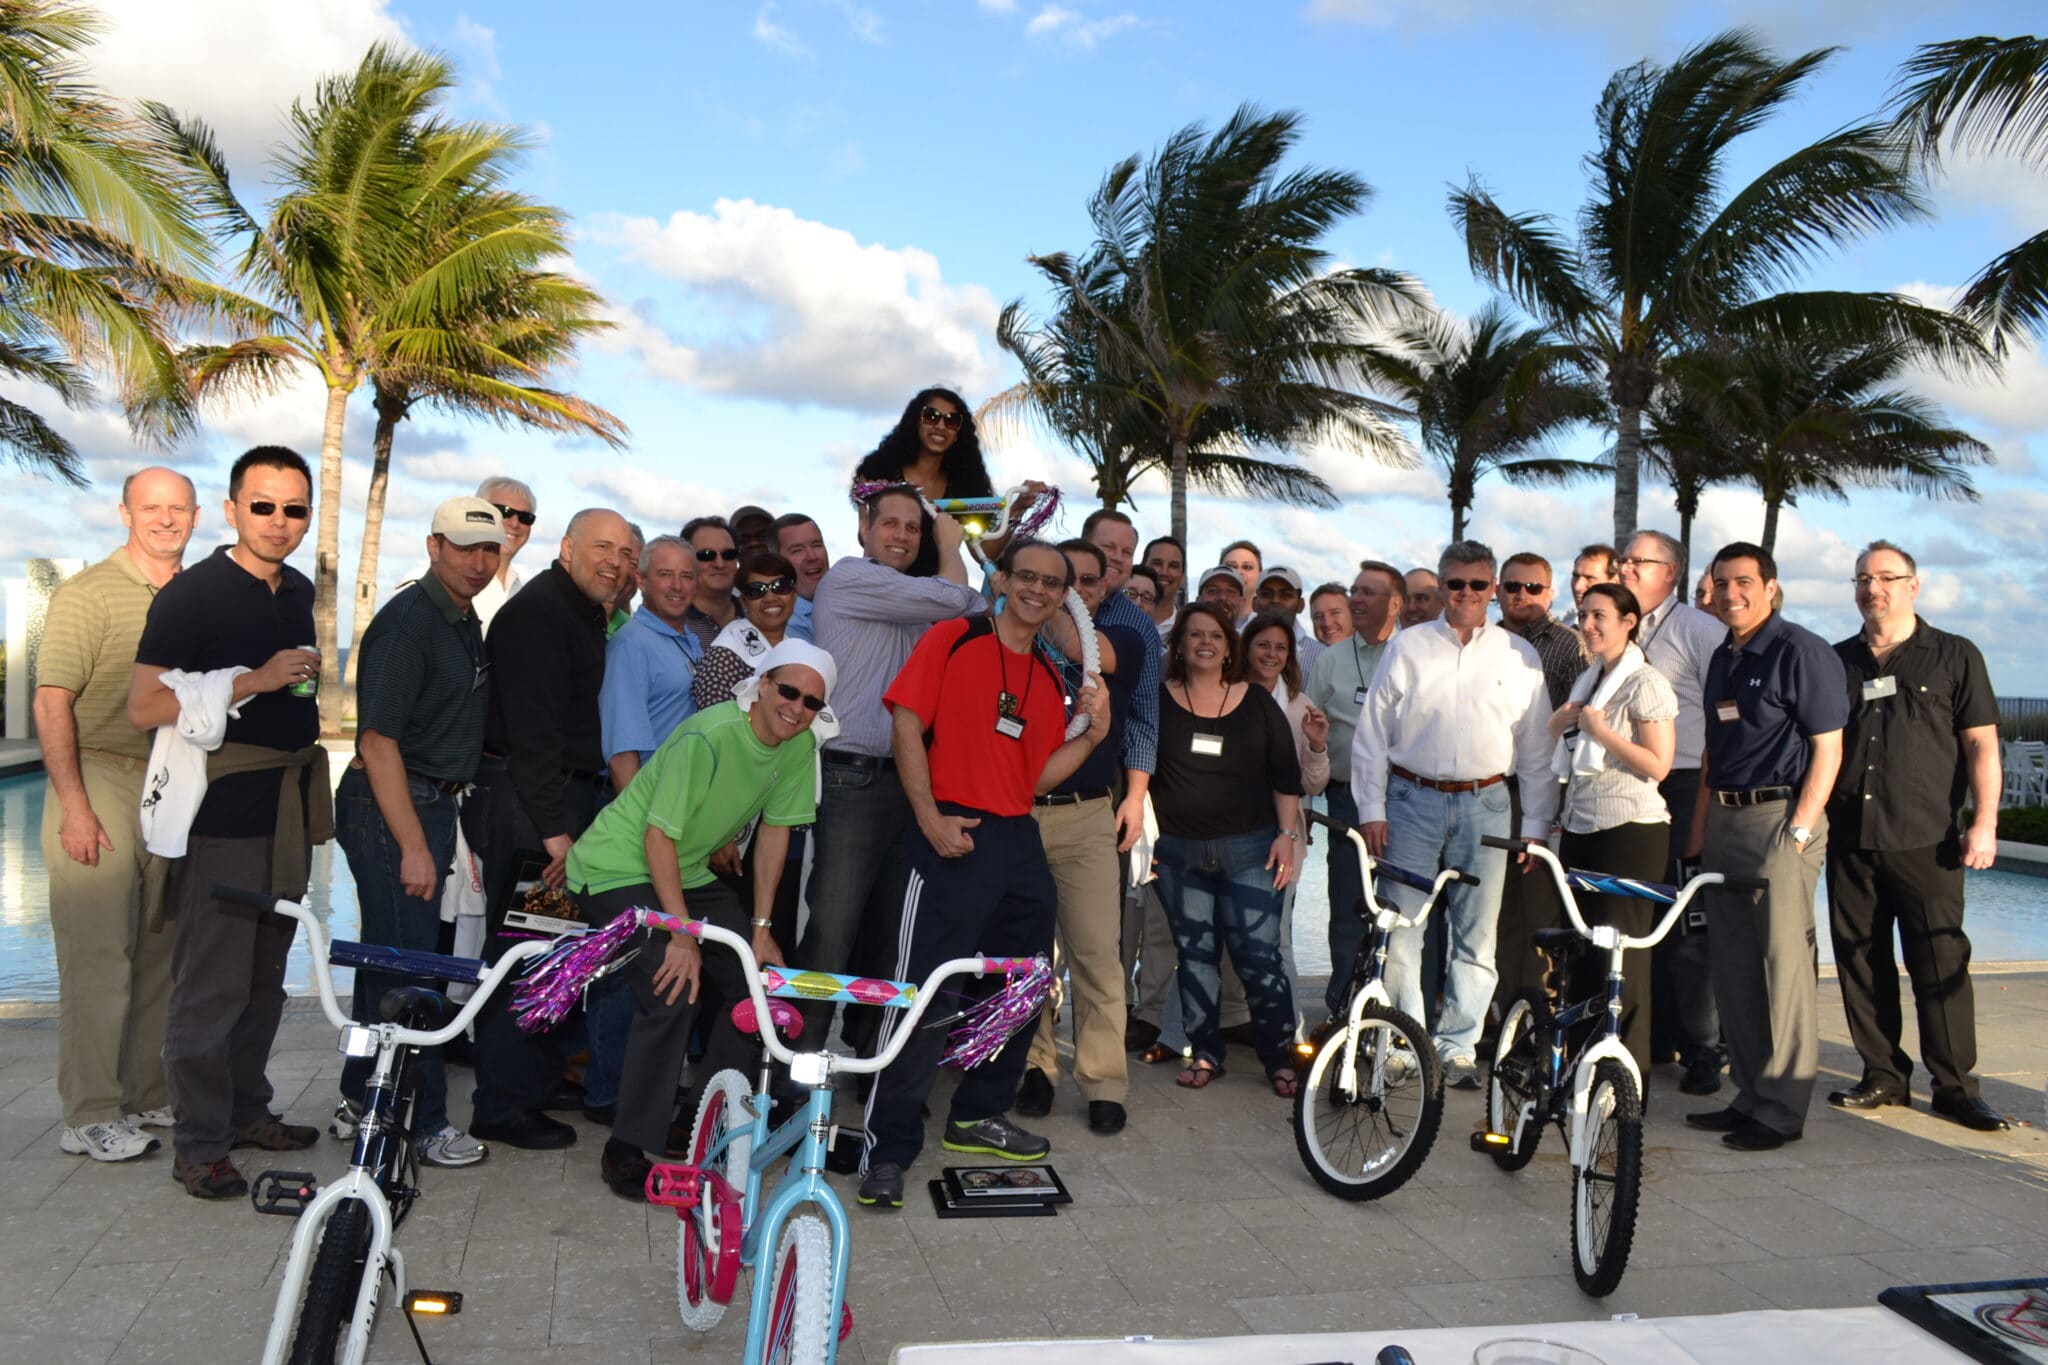 Blackstone Came Boca Raton, Florida, to Strengthen Teamwork With a Build-A-Bike Event